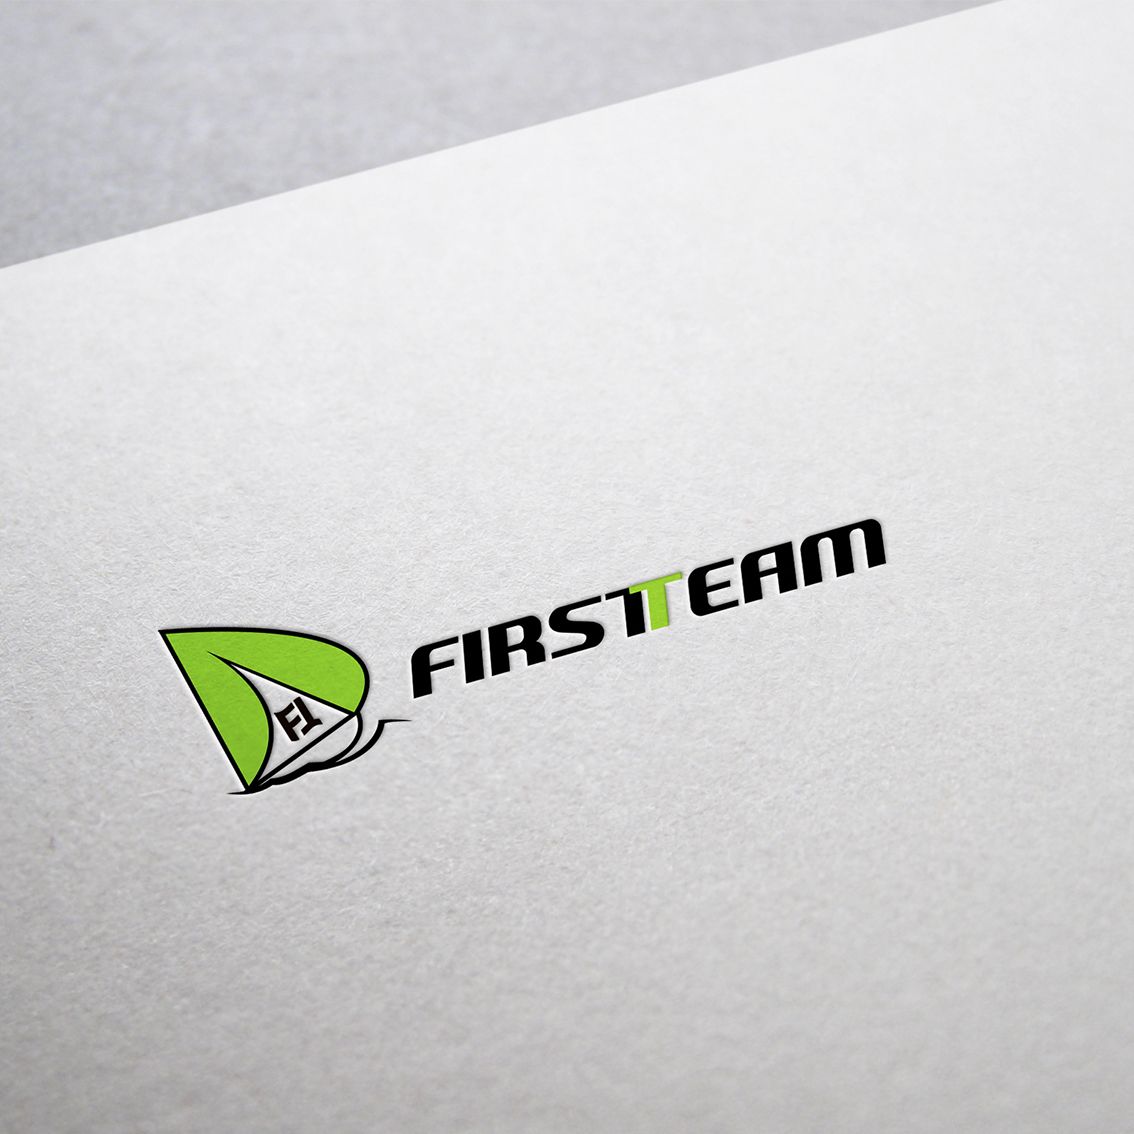 Логотип для продавца яхт - компании First Team - дизайнер mkravchenko